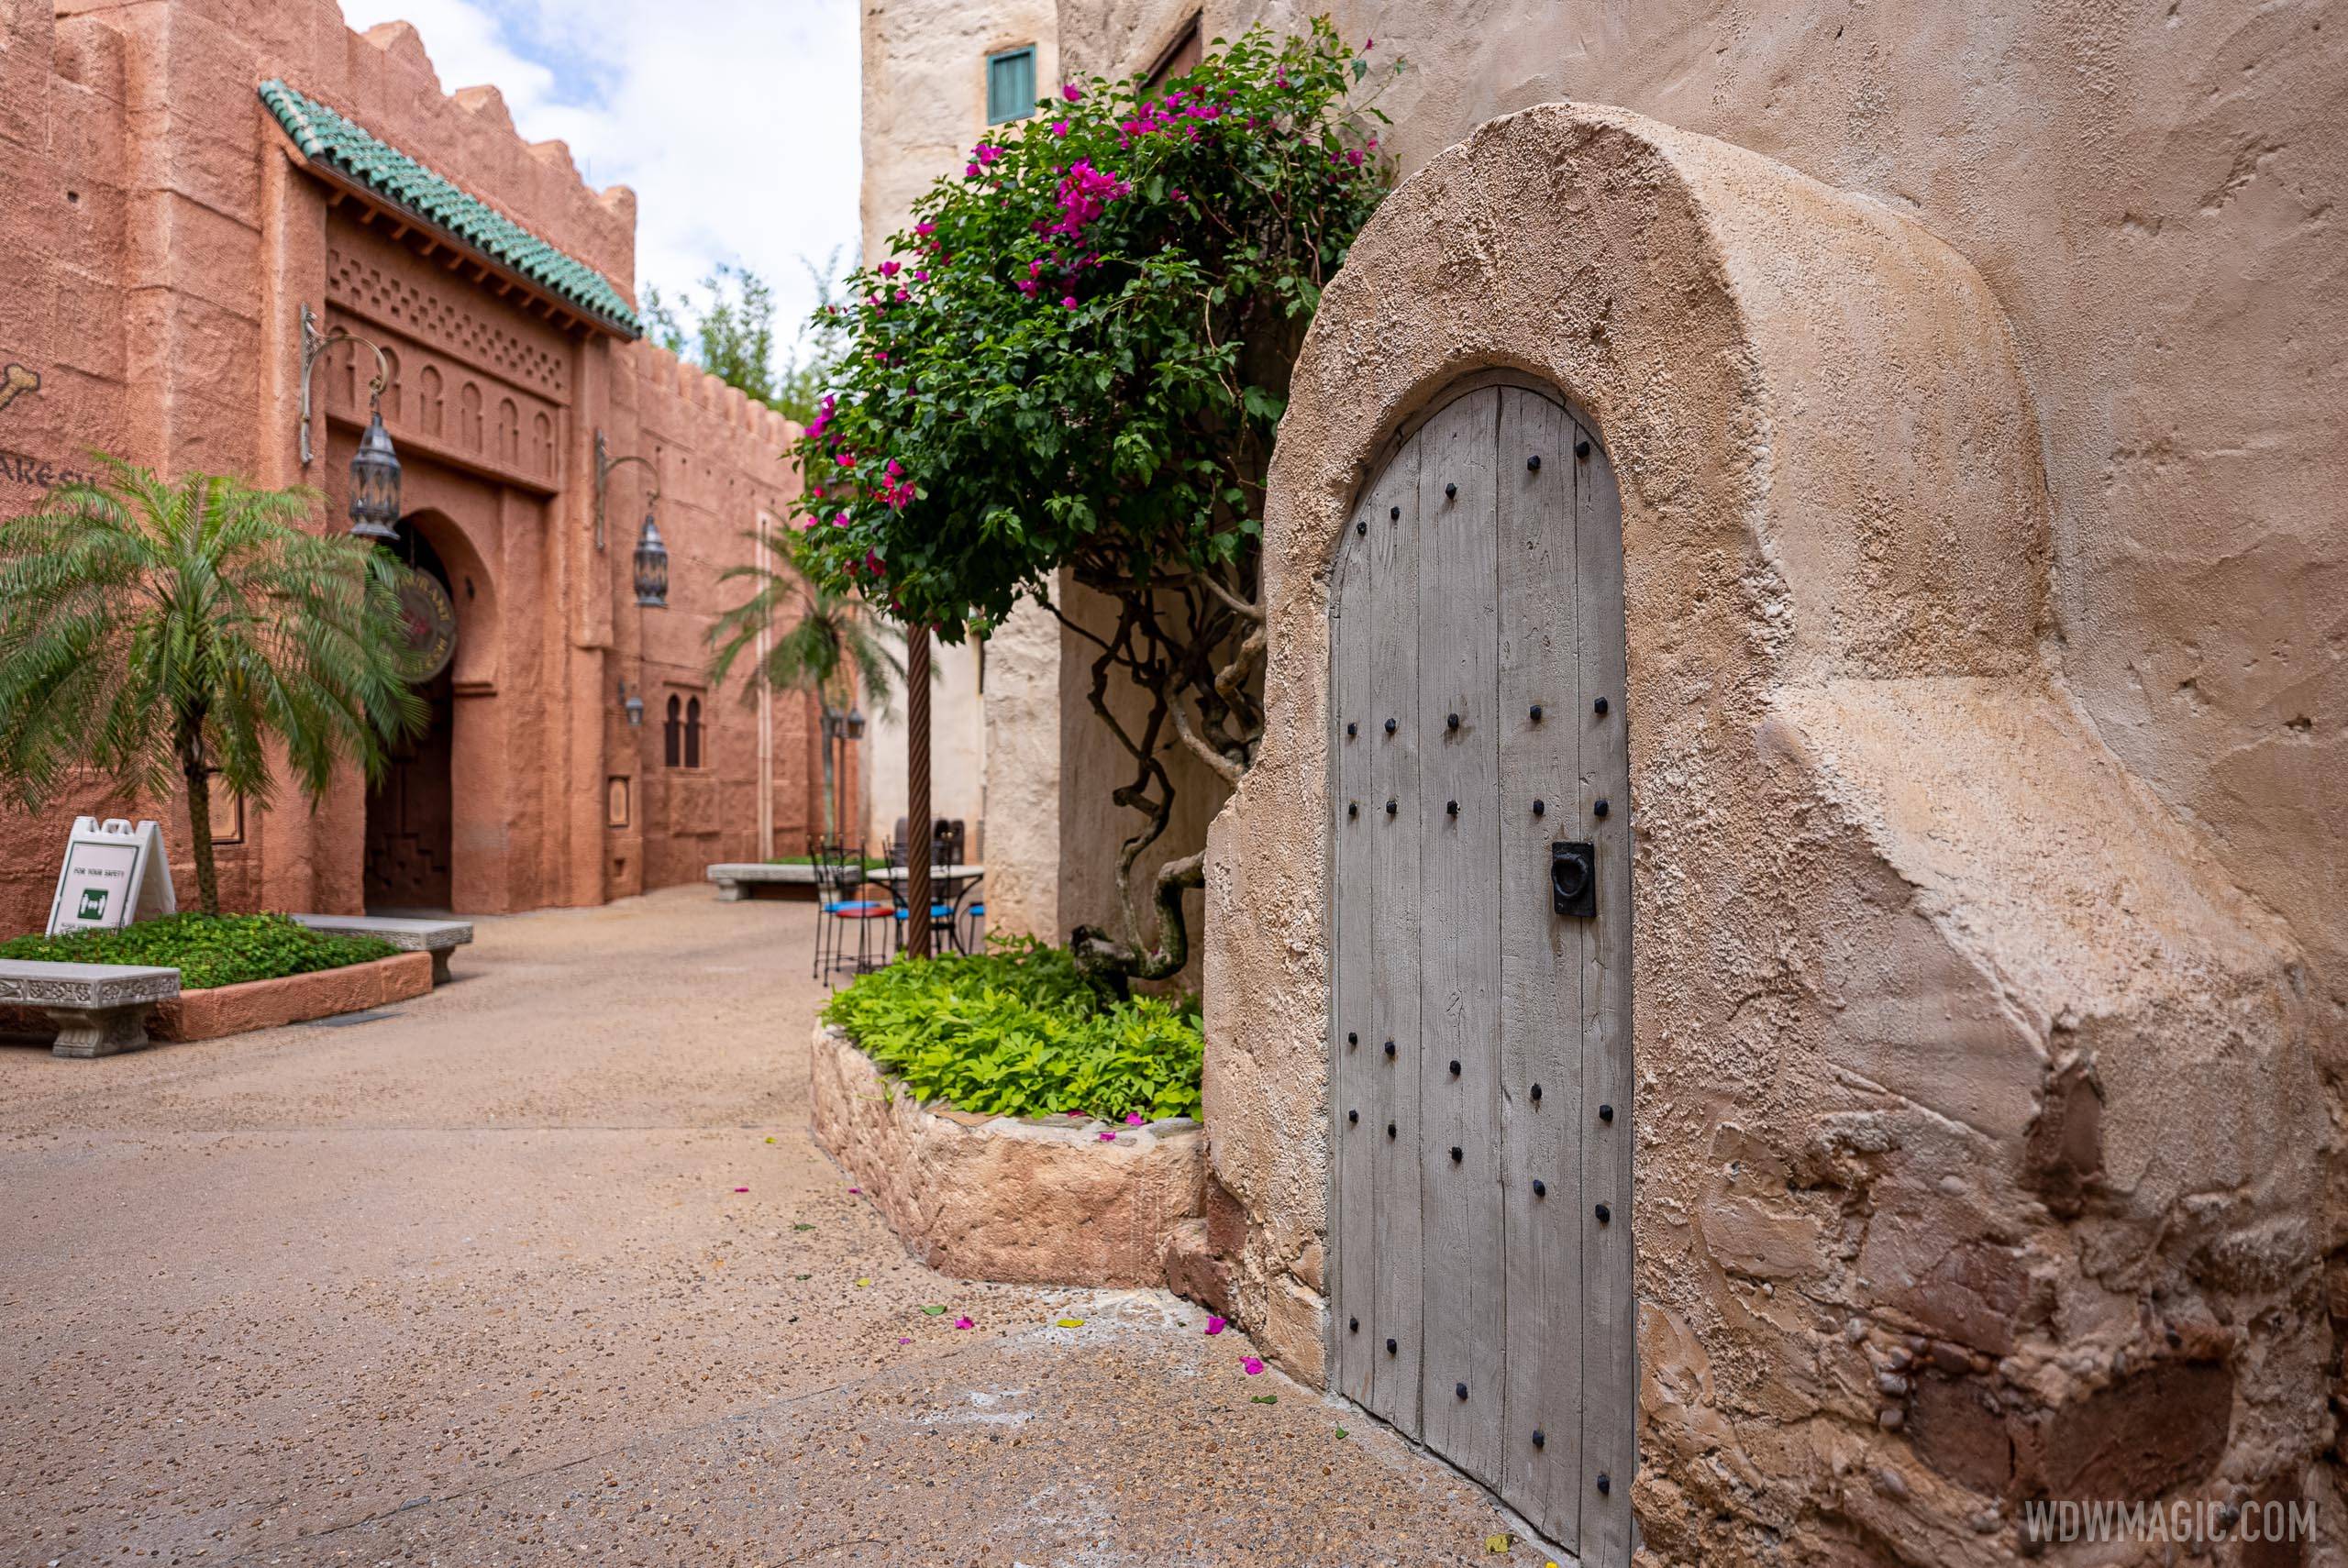 New look for popular Morocco Pavilion social media photo spot